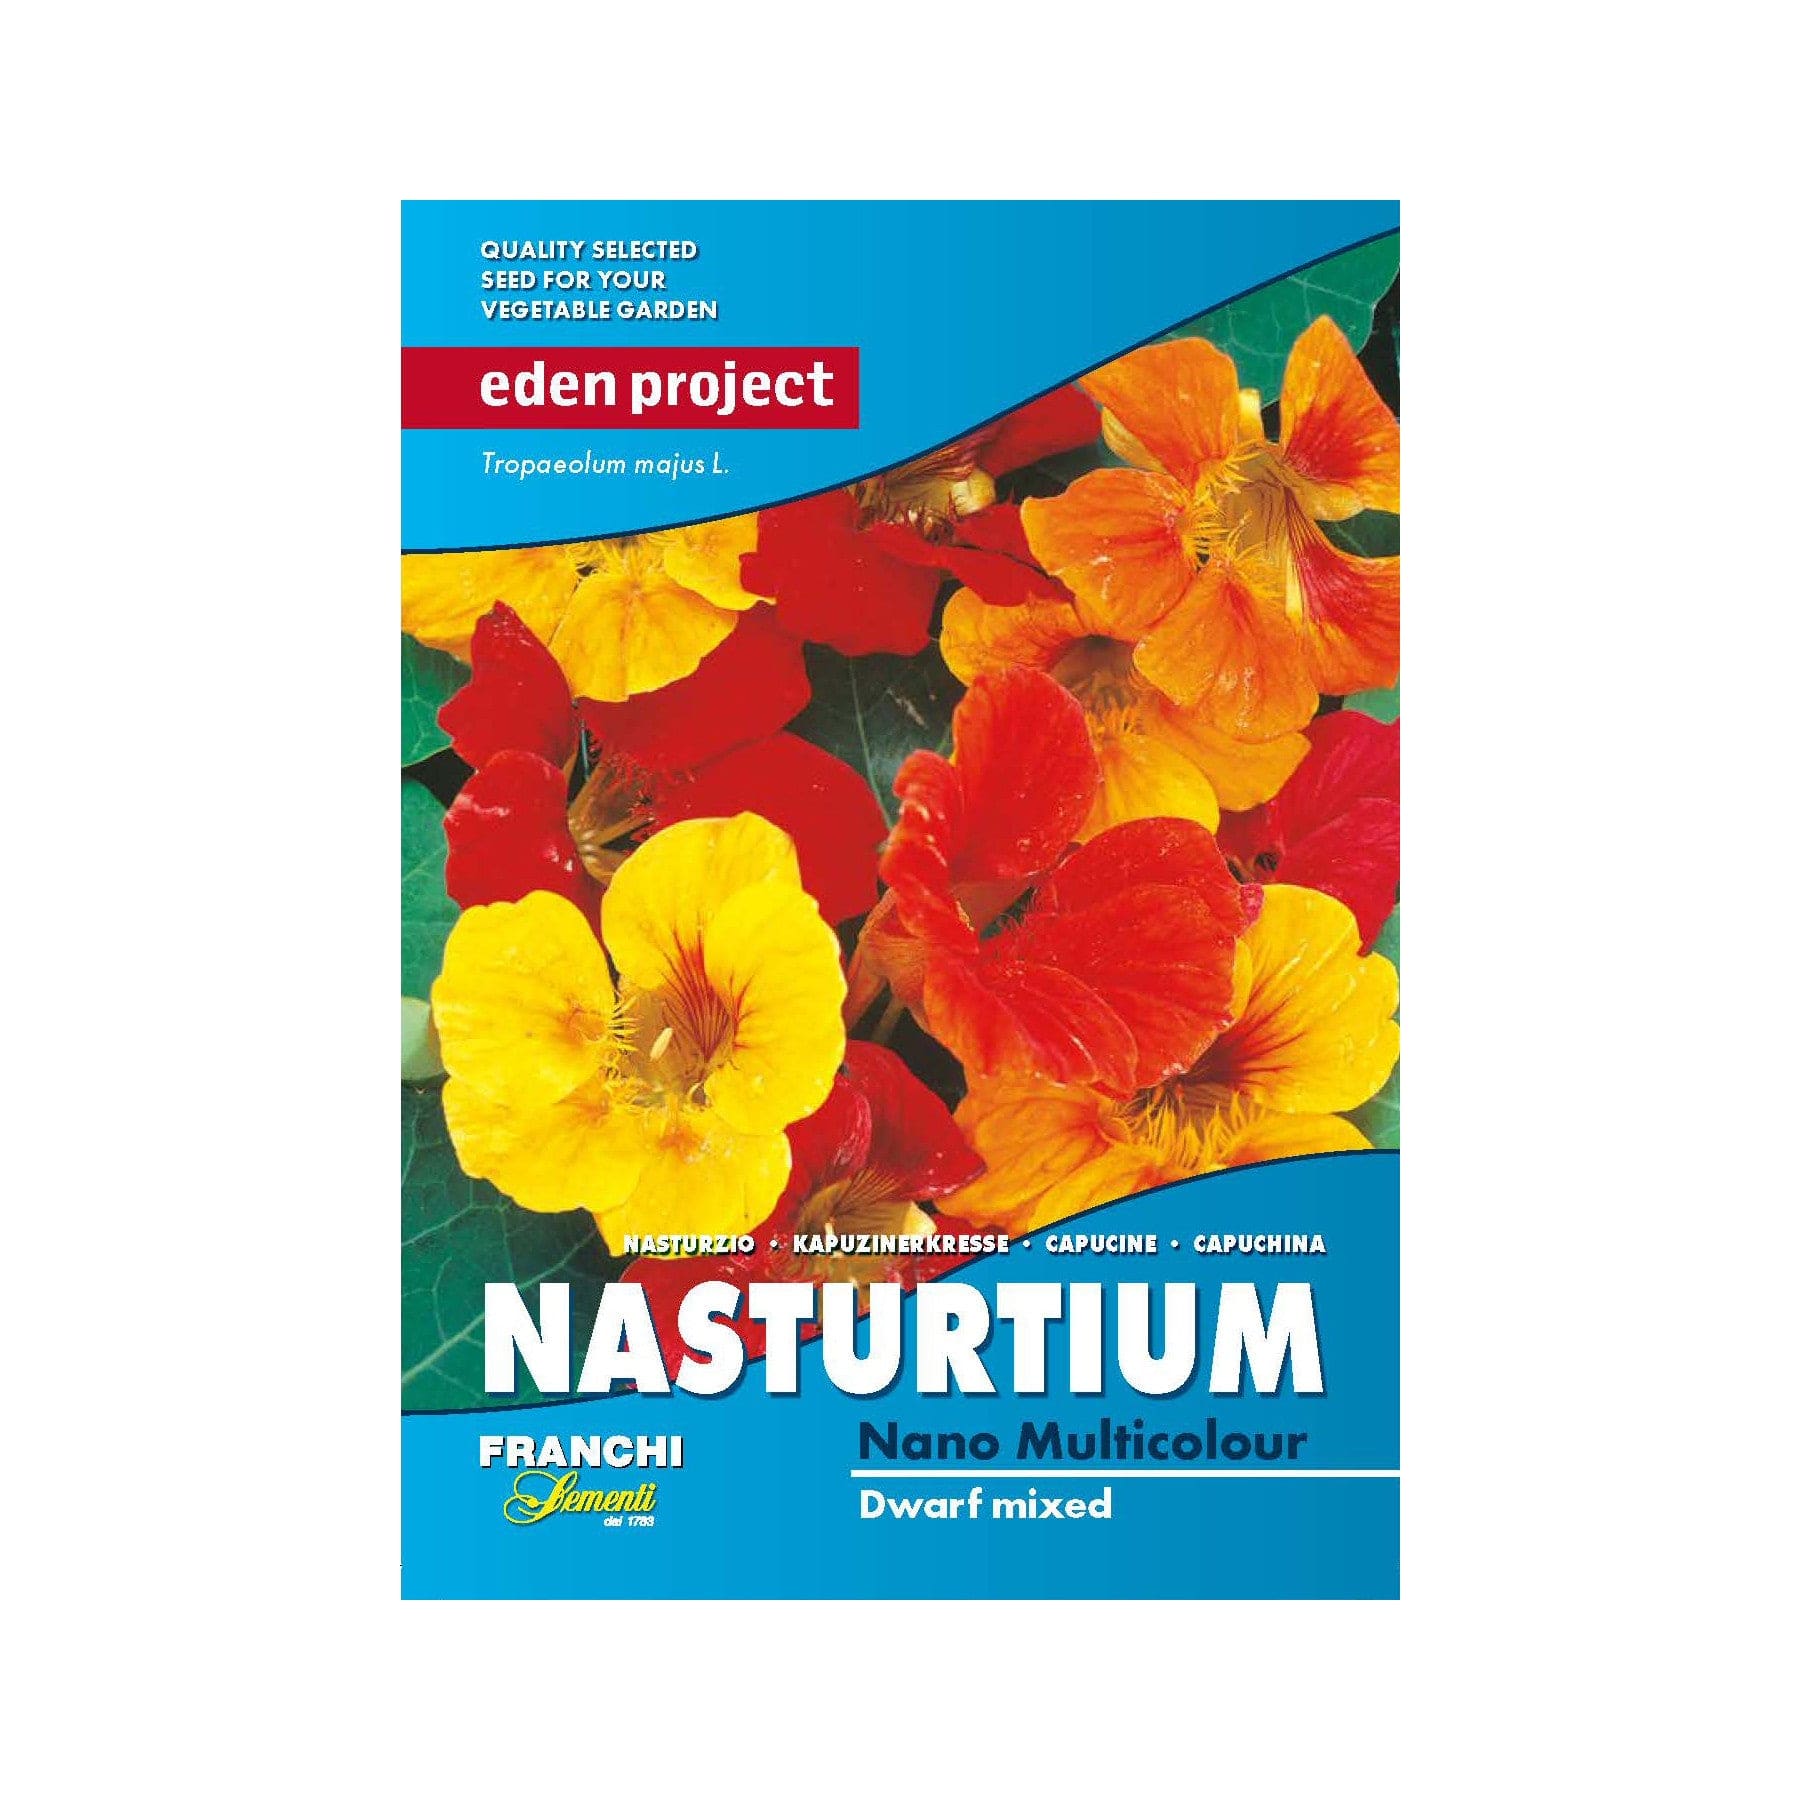 Nasturtium dwarf mixed seeds